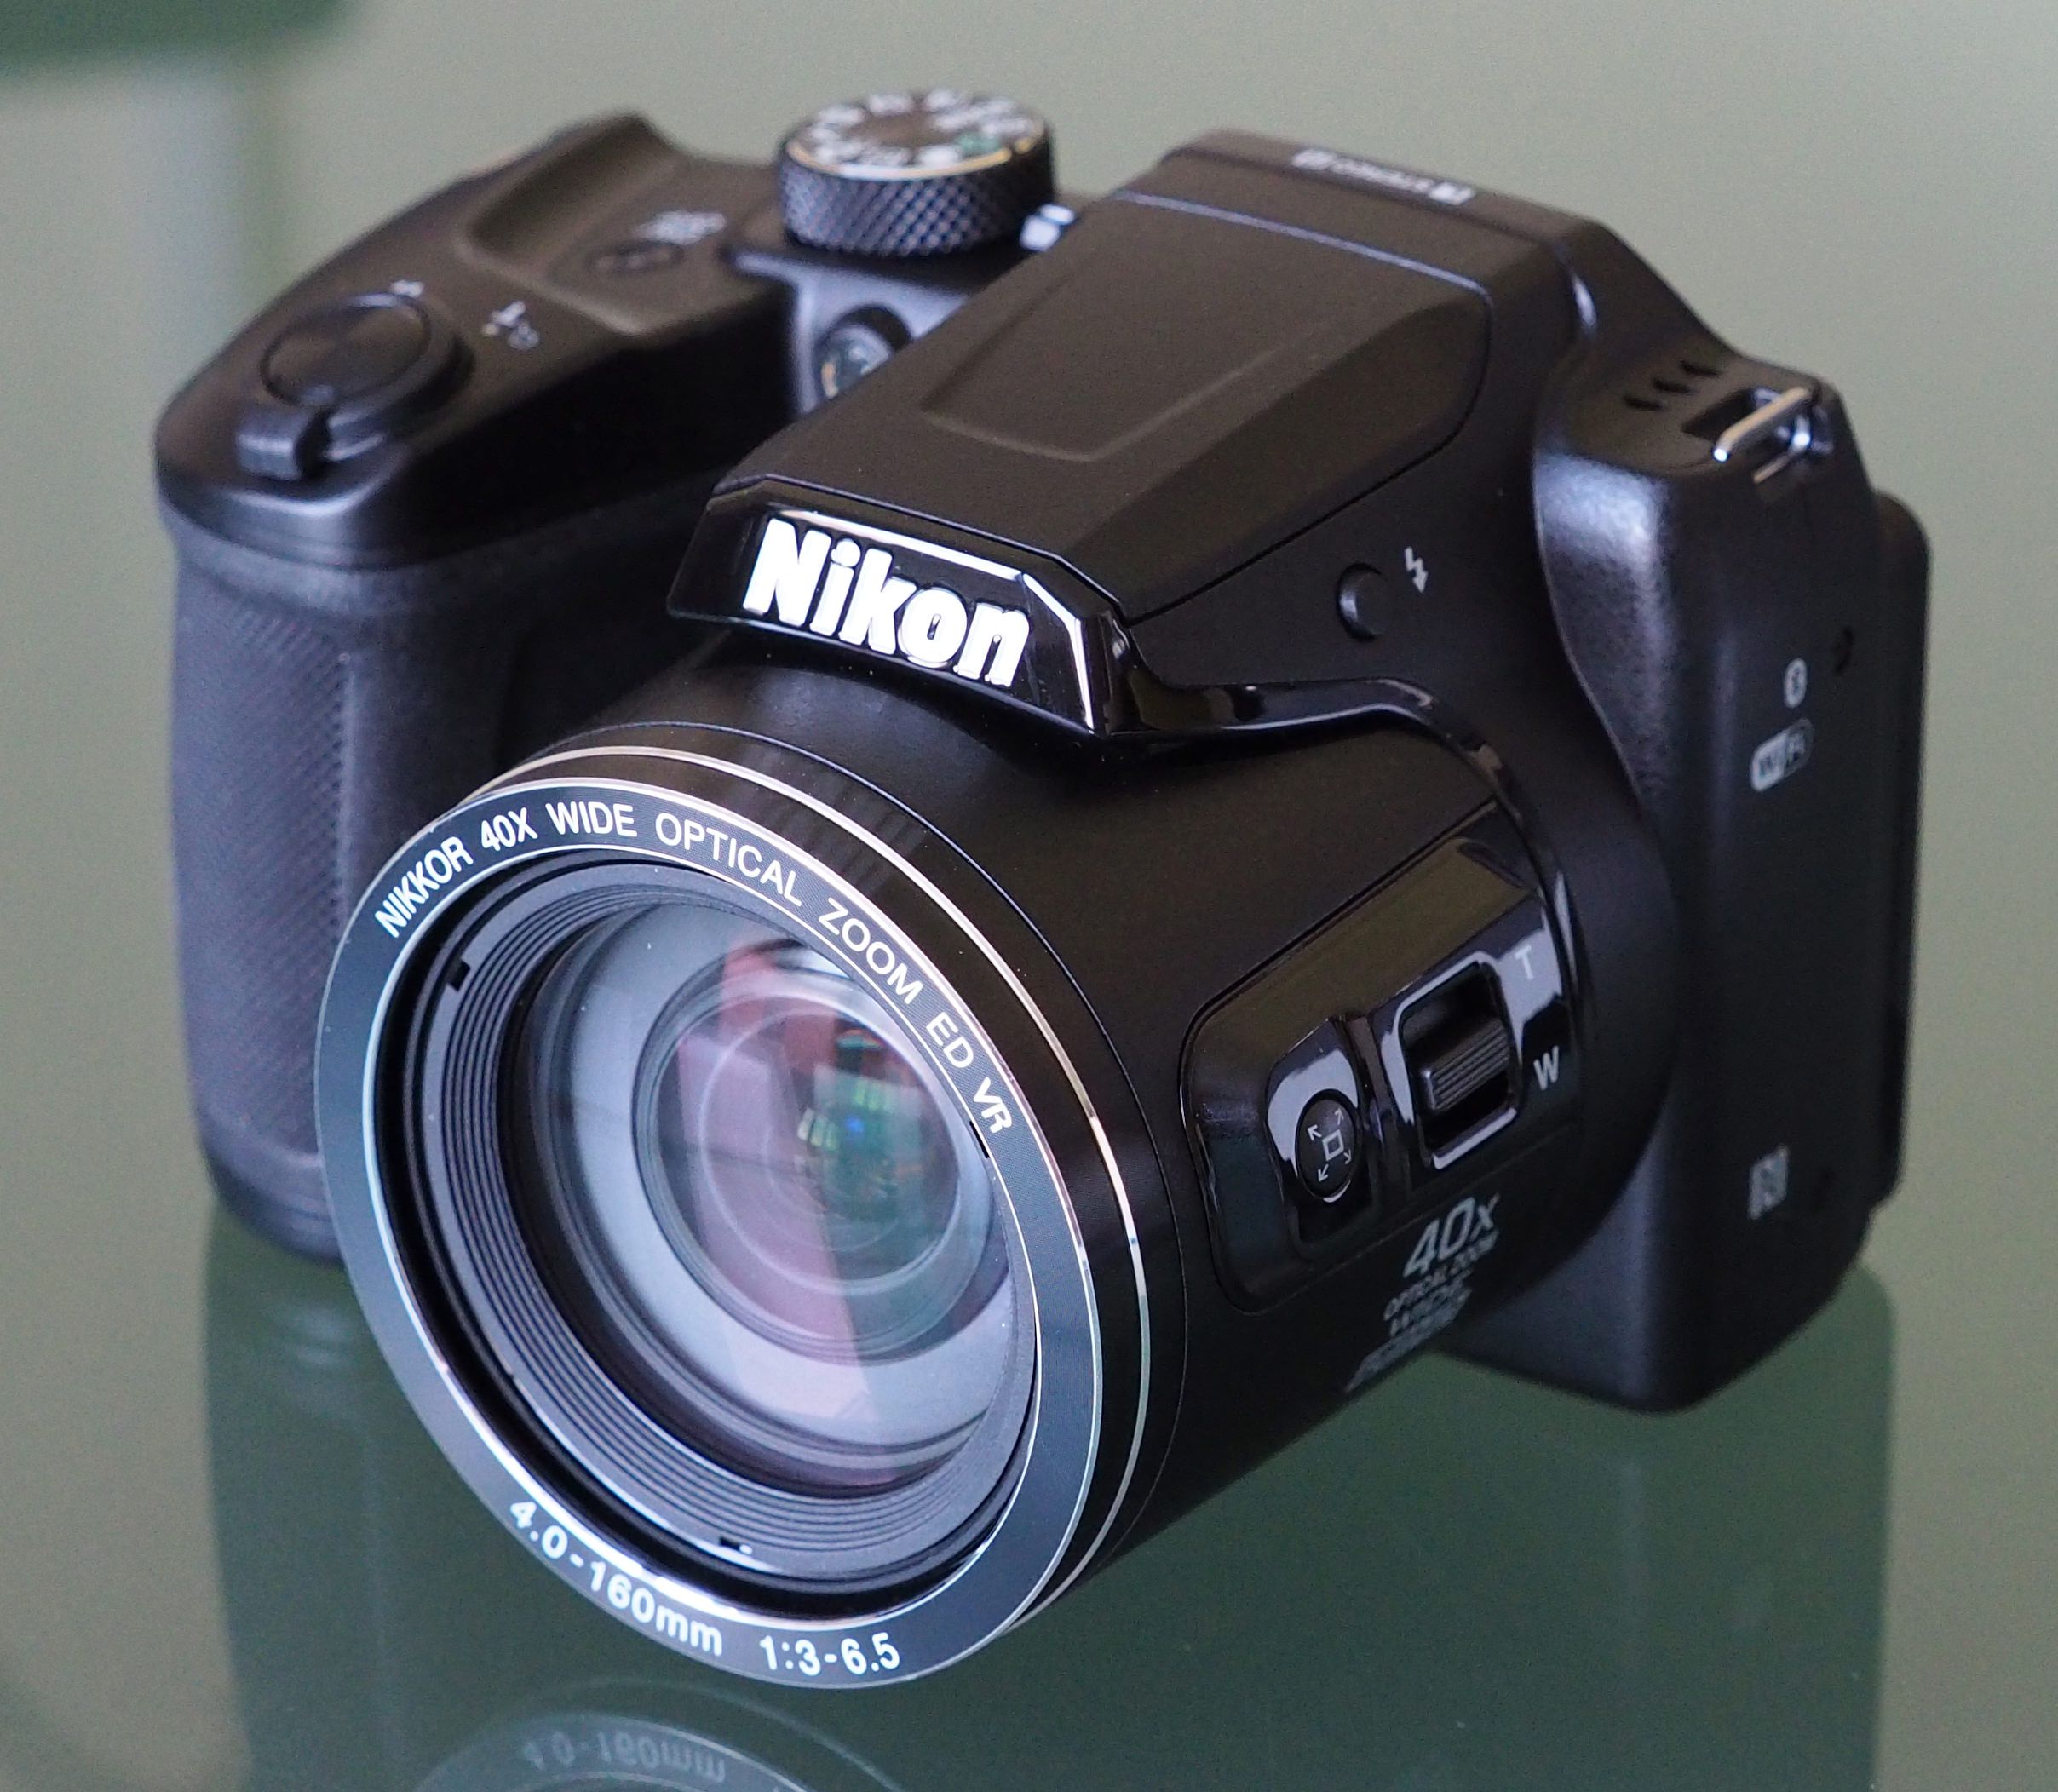 Nikon COOLPIX B500 Review: A Wi-Fi Camera That Does Not Impress